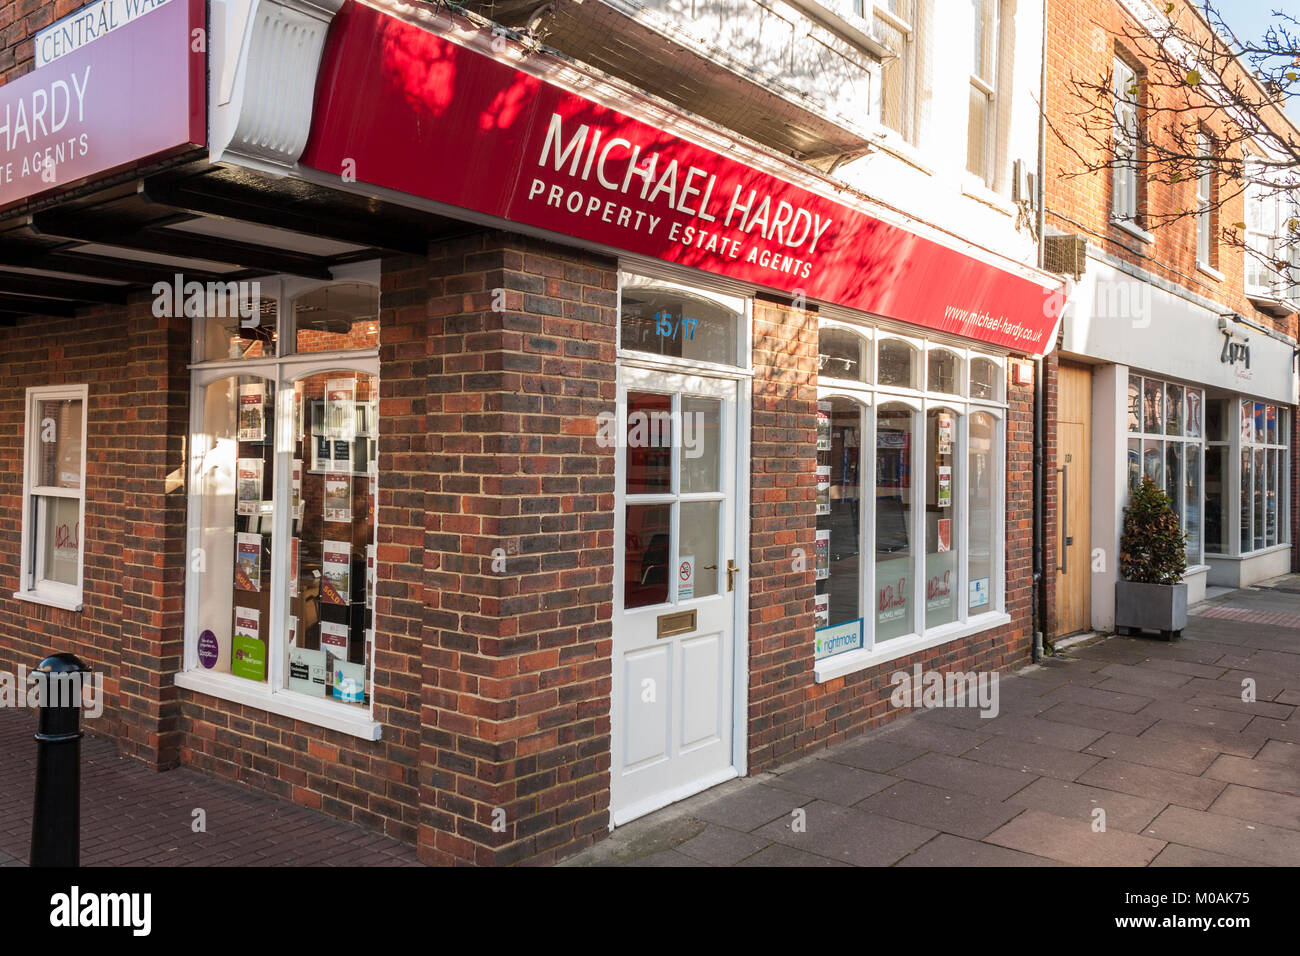 Michael Hardy property Estate Agents, Wokingham, Berkshire, England, GB, UK Stockfoto